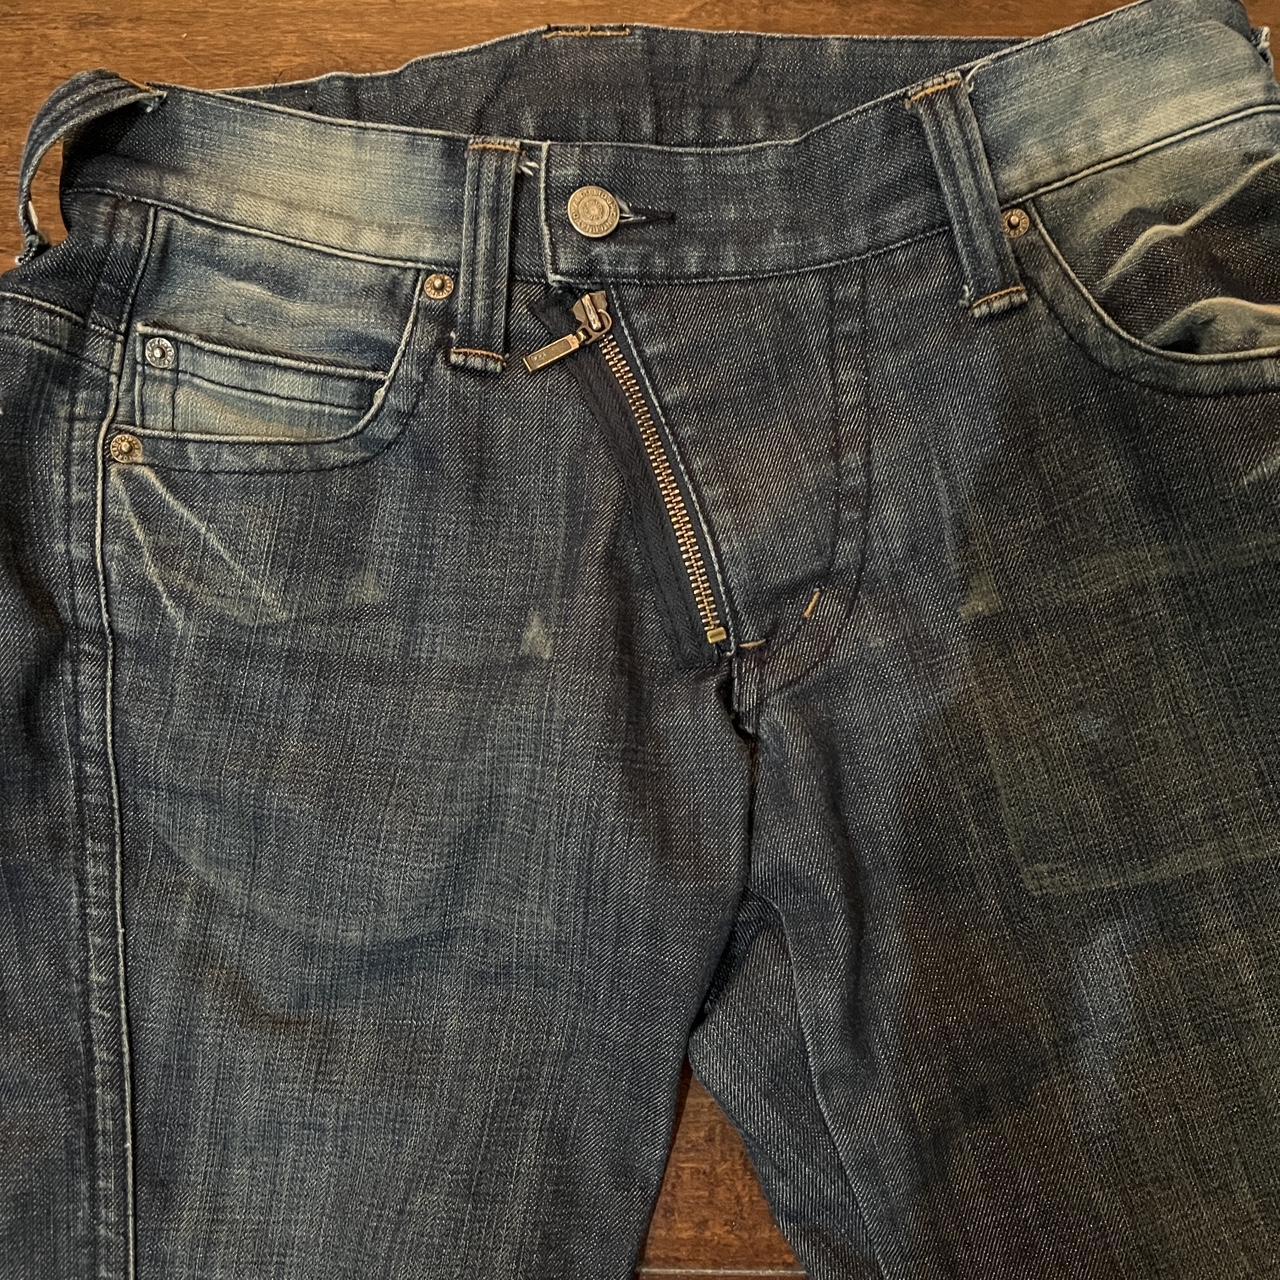 Tornado mart flared jeans 32x32 with asymmetrical... - Depop